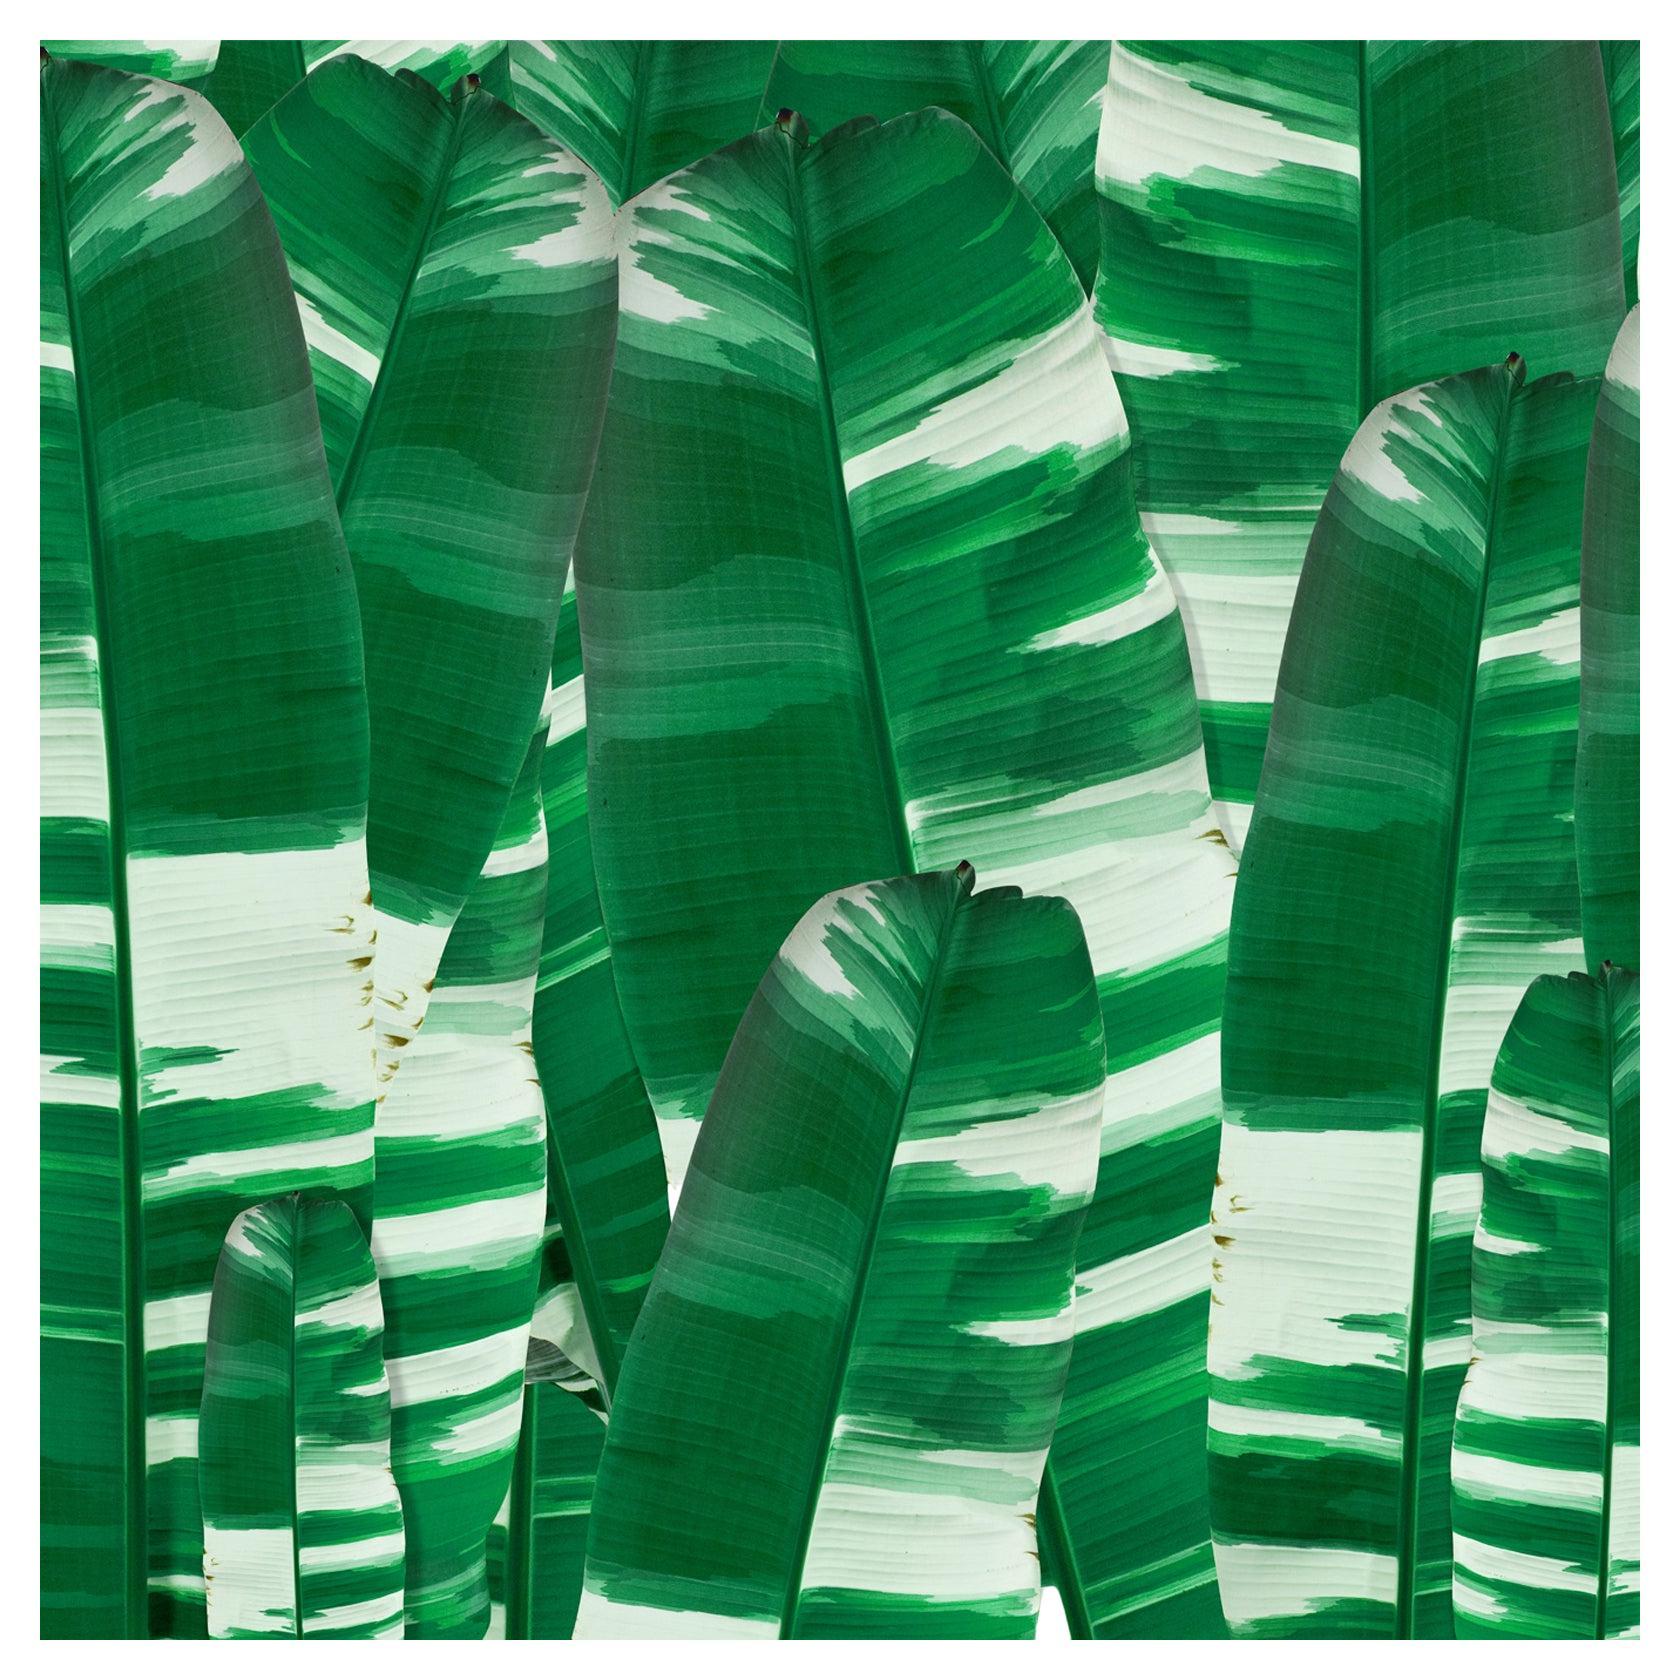 EDGE Kollektionen Vertical Leaf Verde aus unserer Kollektion Tropical Modernism